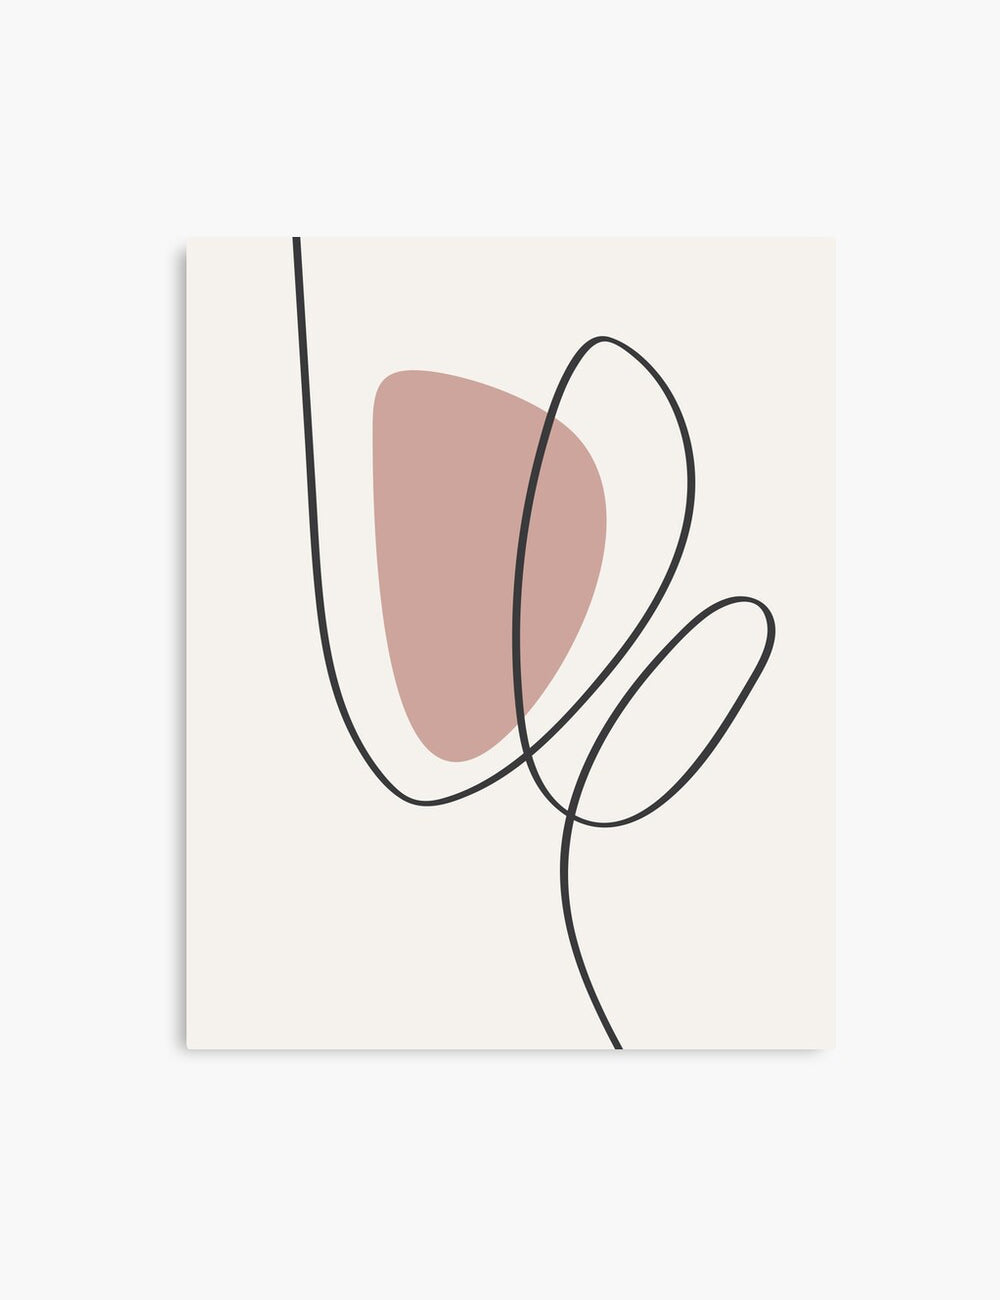 MINIMAL LINE ART. Abstract Shapes. Boho Aesthetic. Blush. Rose. Pale Red. Beige. Black. Printable Wall Art Illustration. - PAPER MOON Art & Design